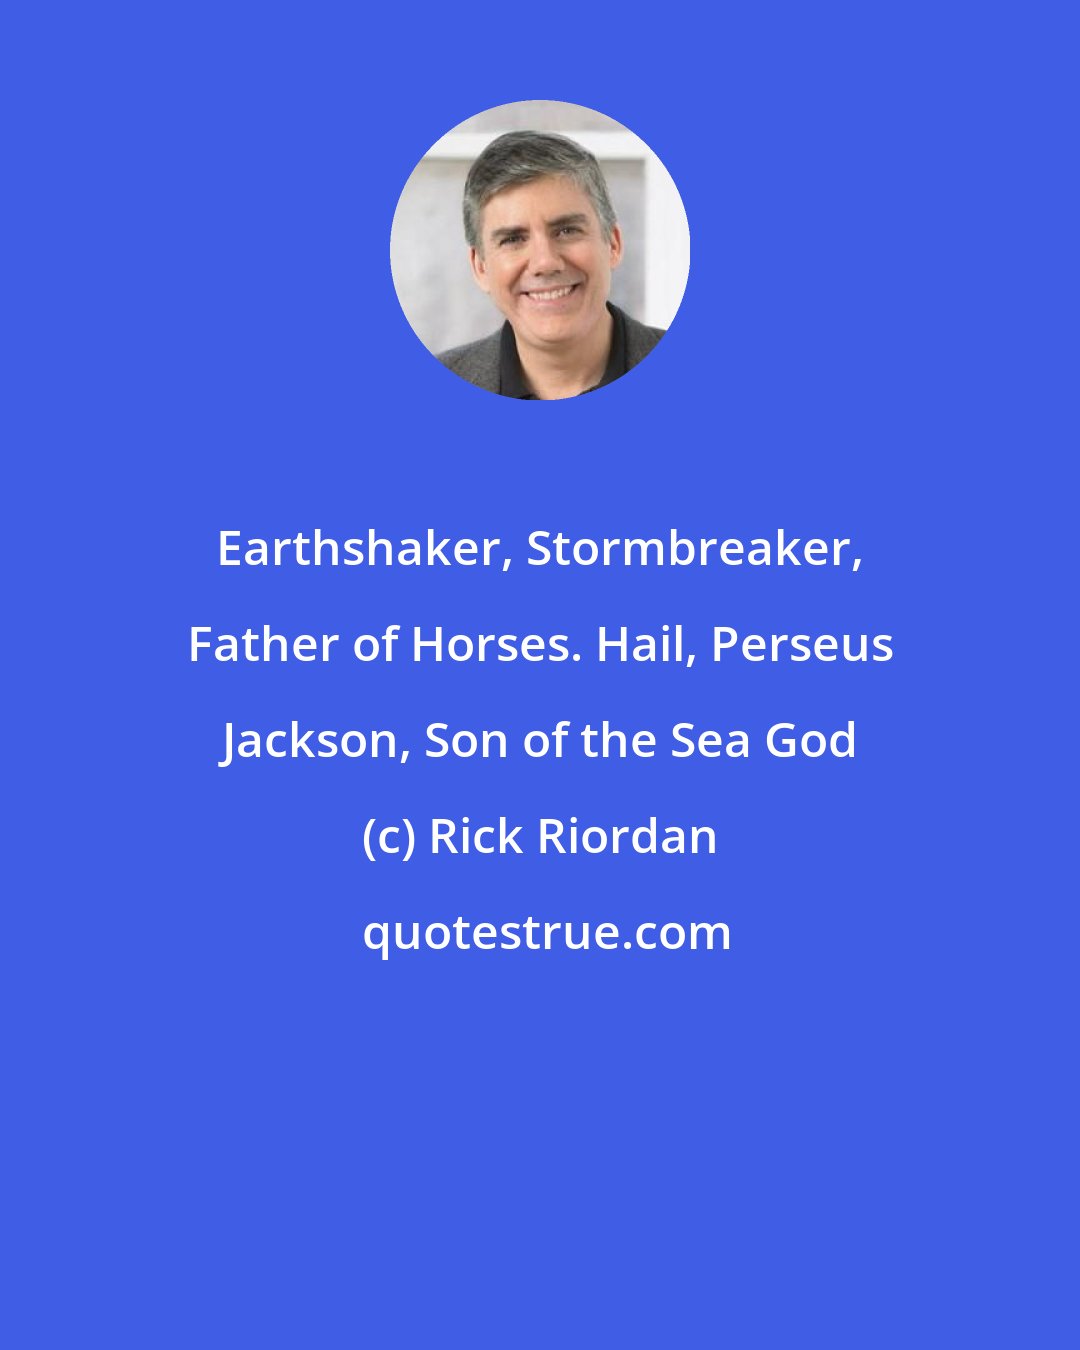 Rick Riordan: Earthshaker, Stormbreaker, Father of Horses. Hail, Perseus Jackson, Son of the Sea God